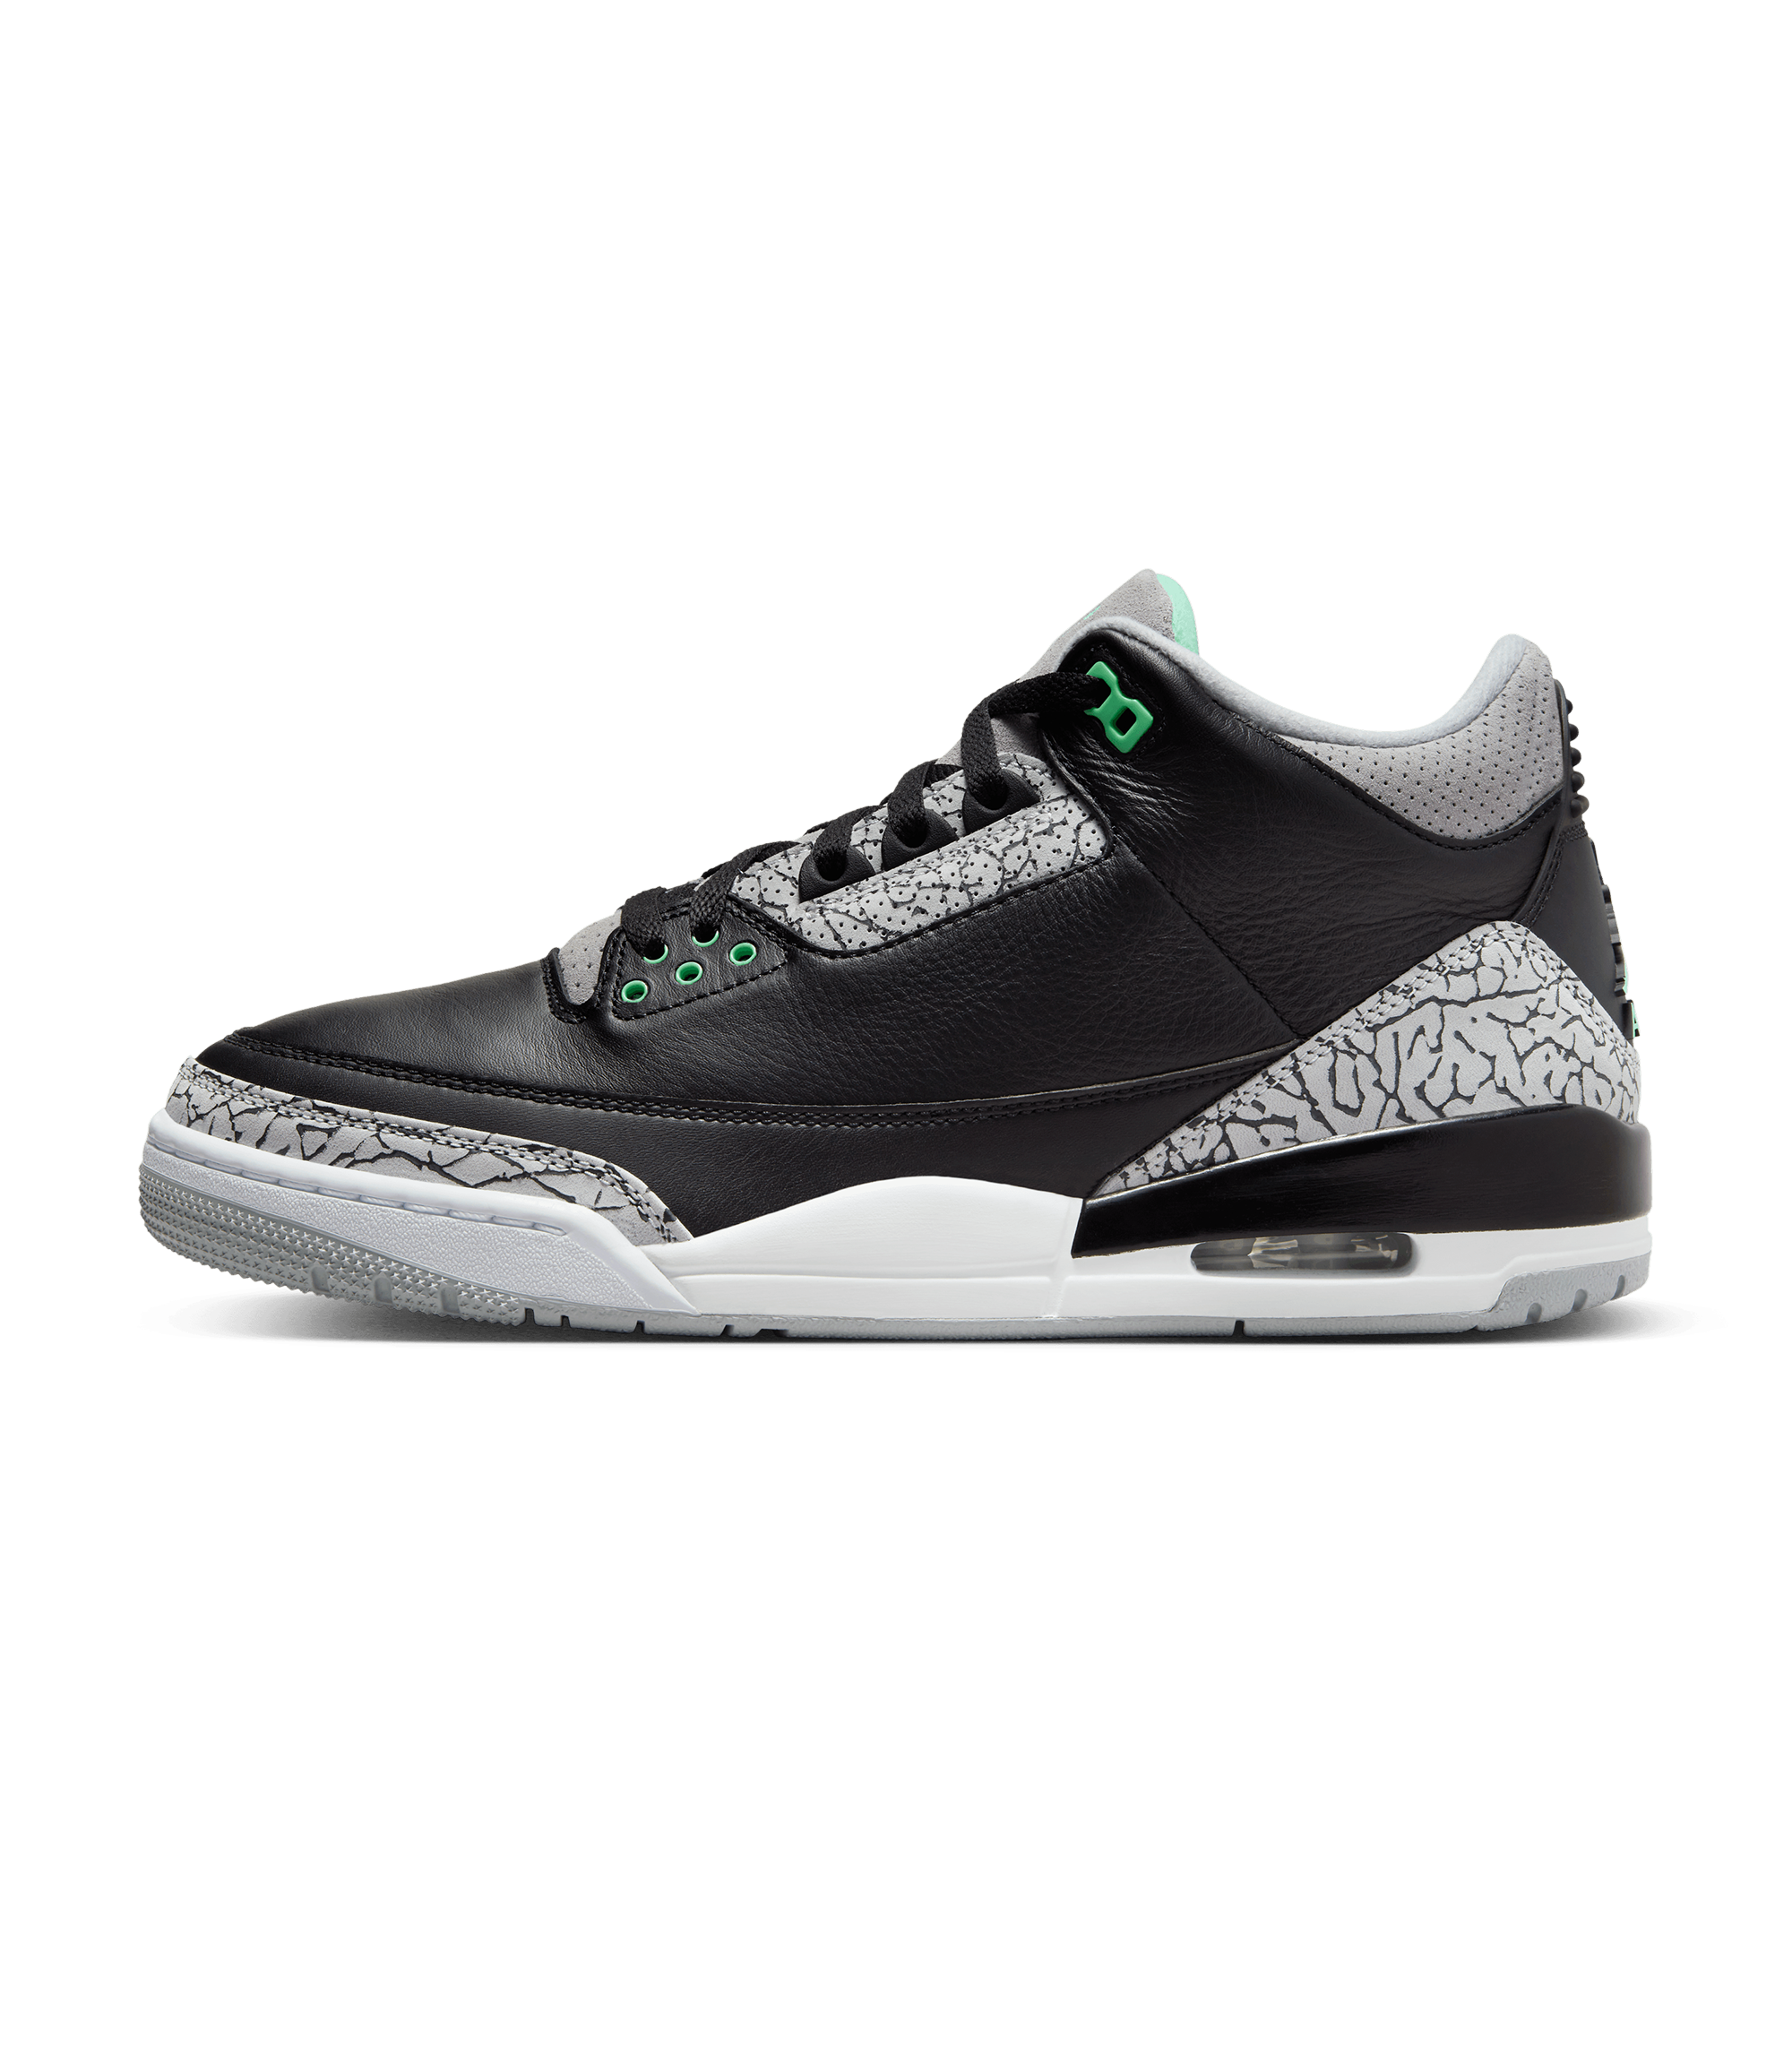 Air Jordan 3 Retro - Black / Wolf Grey / White / Green Glow